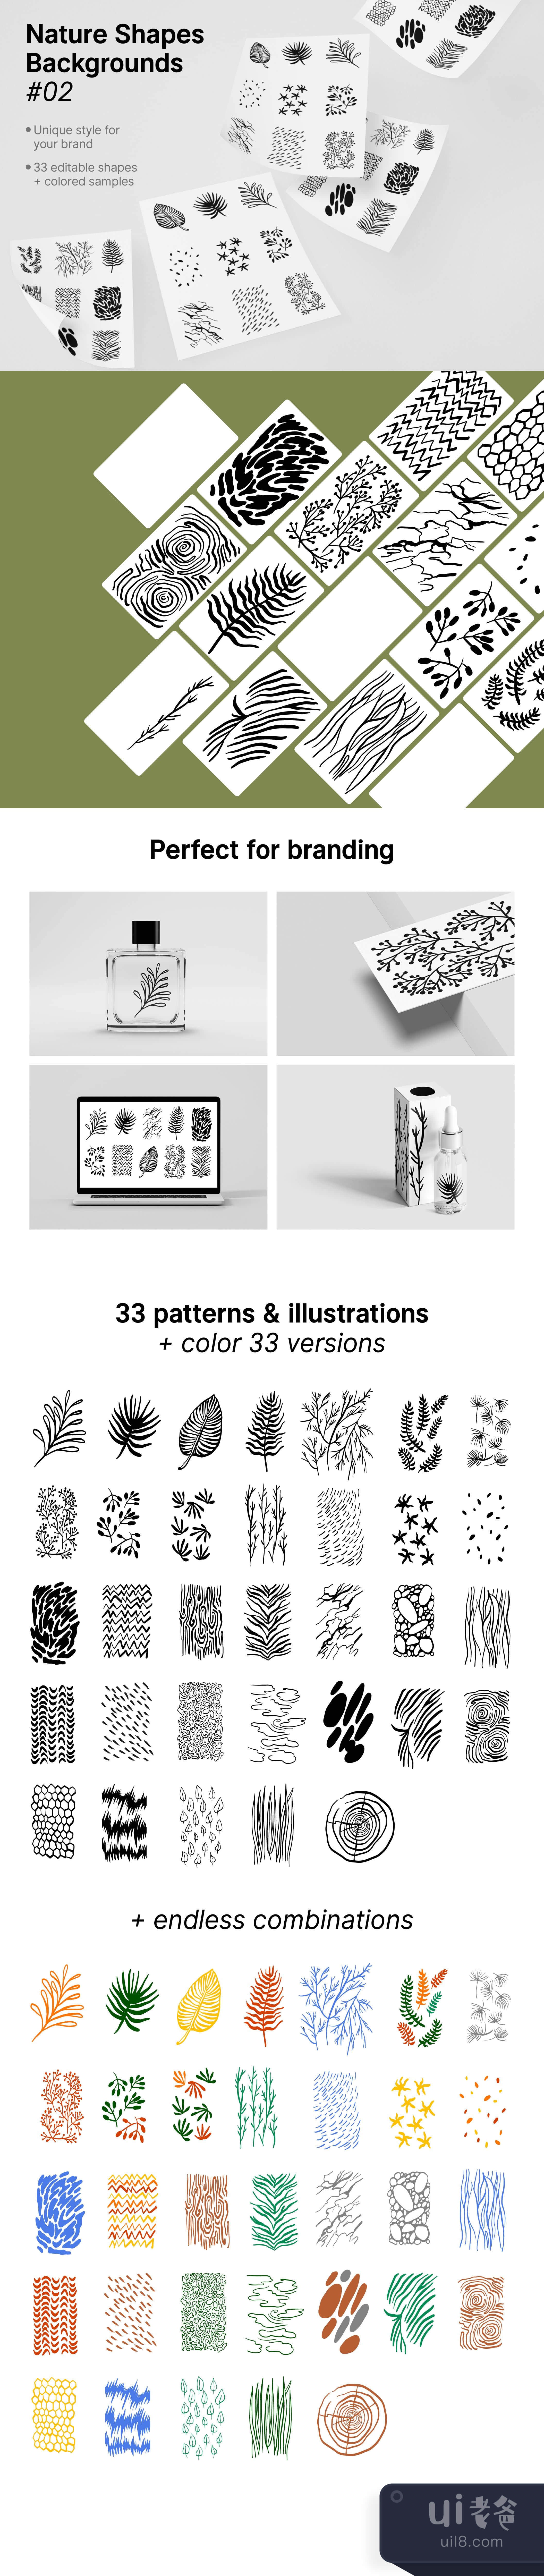 自然界的形状背景图案#2 (Nature Shapes Backgrounds Patterns #插图